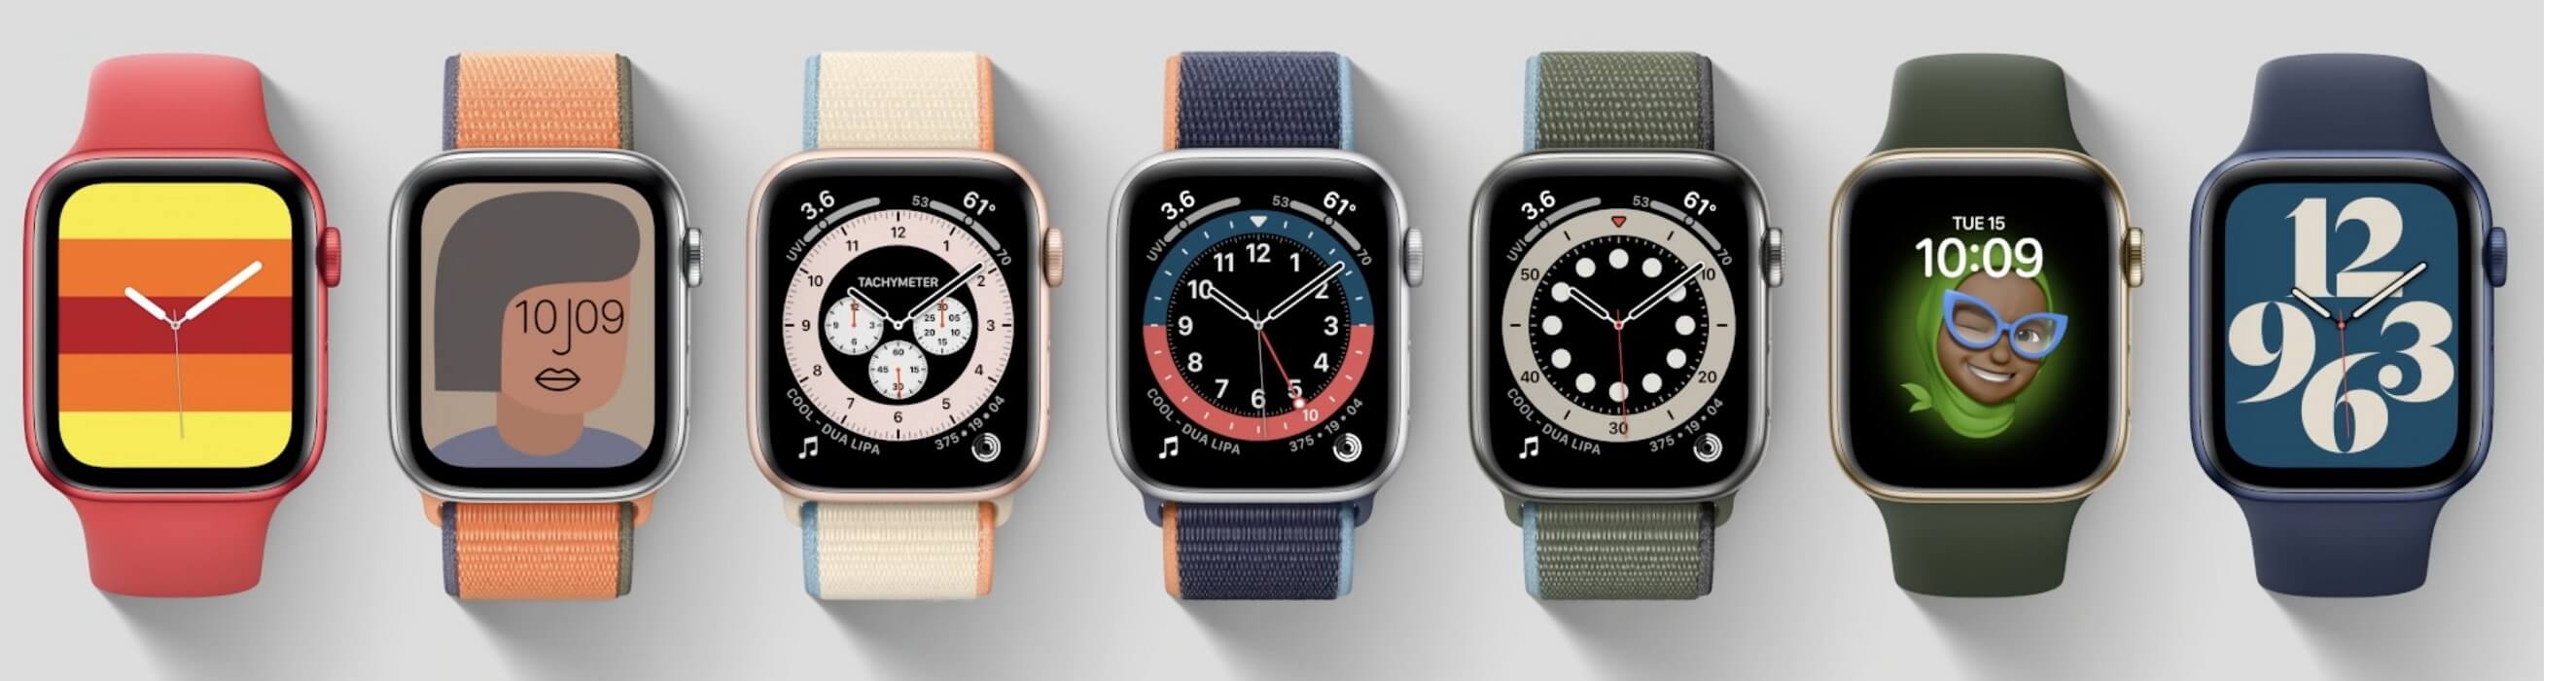 Apple Watch Series 6 colors